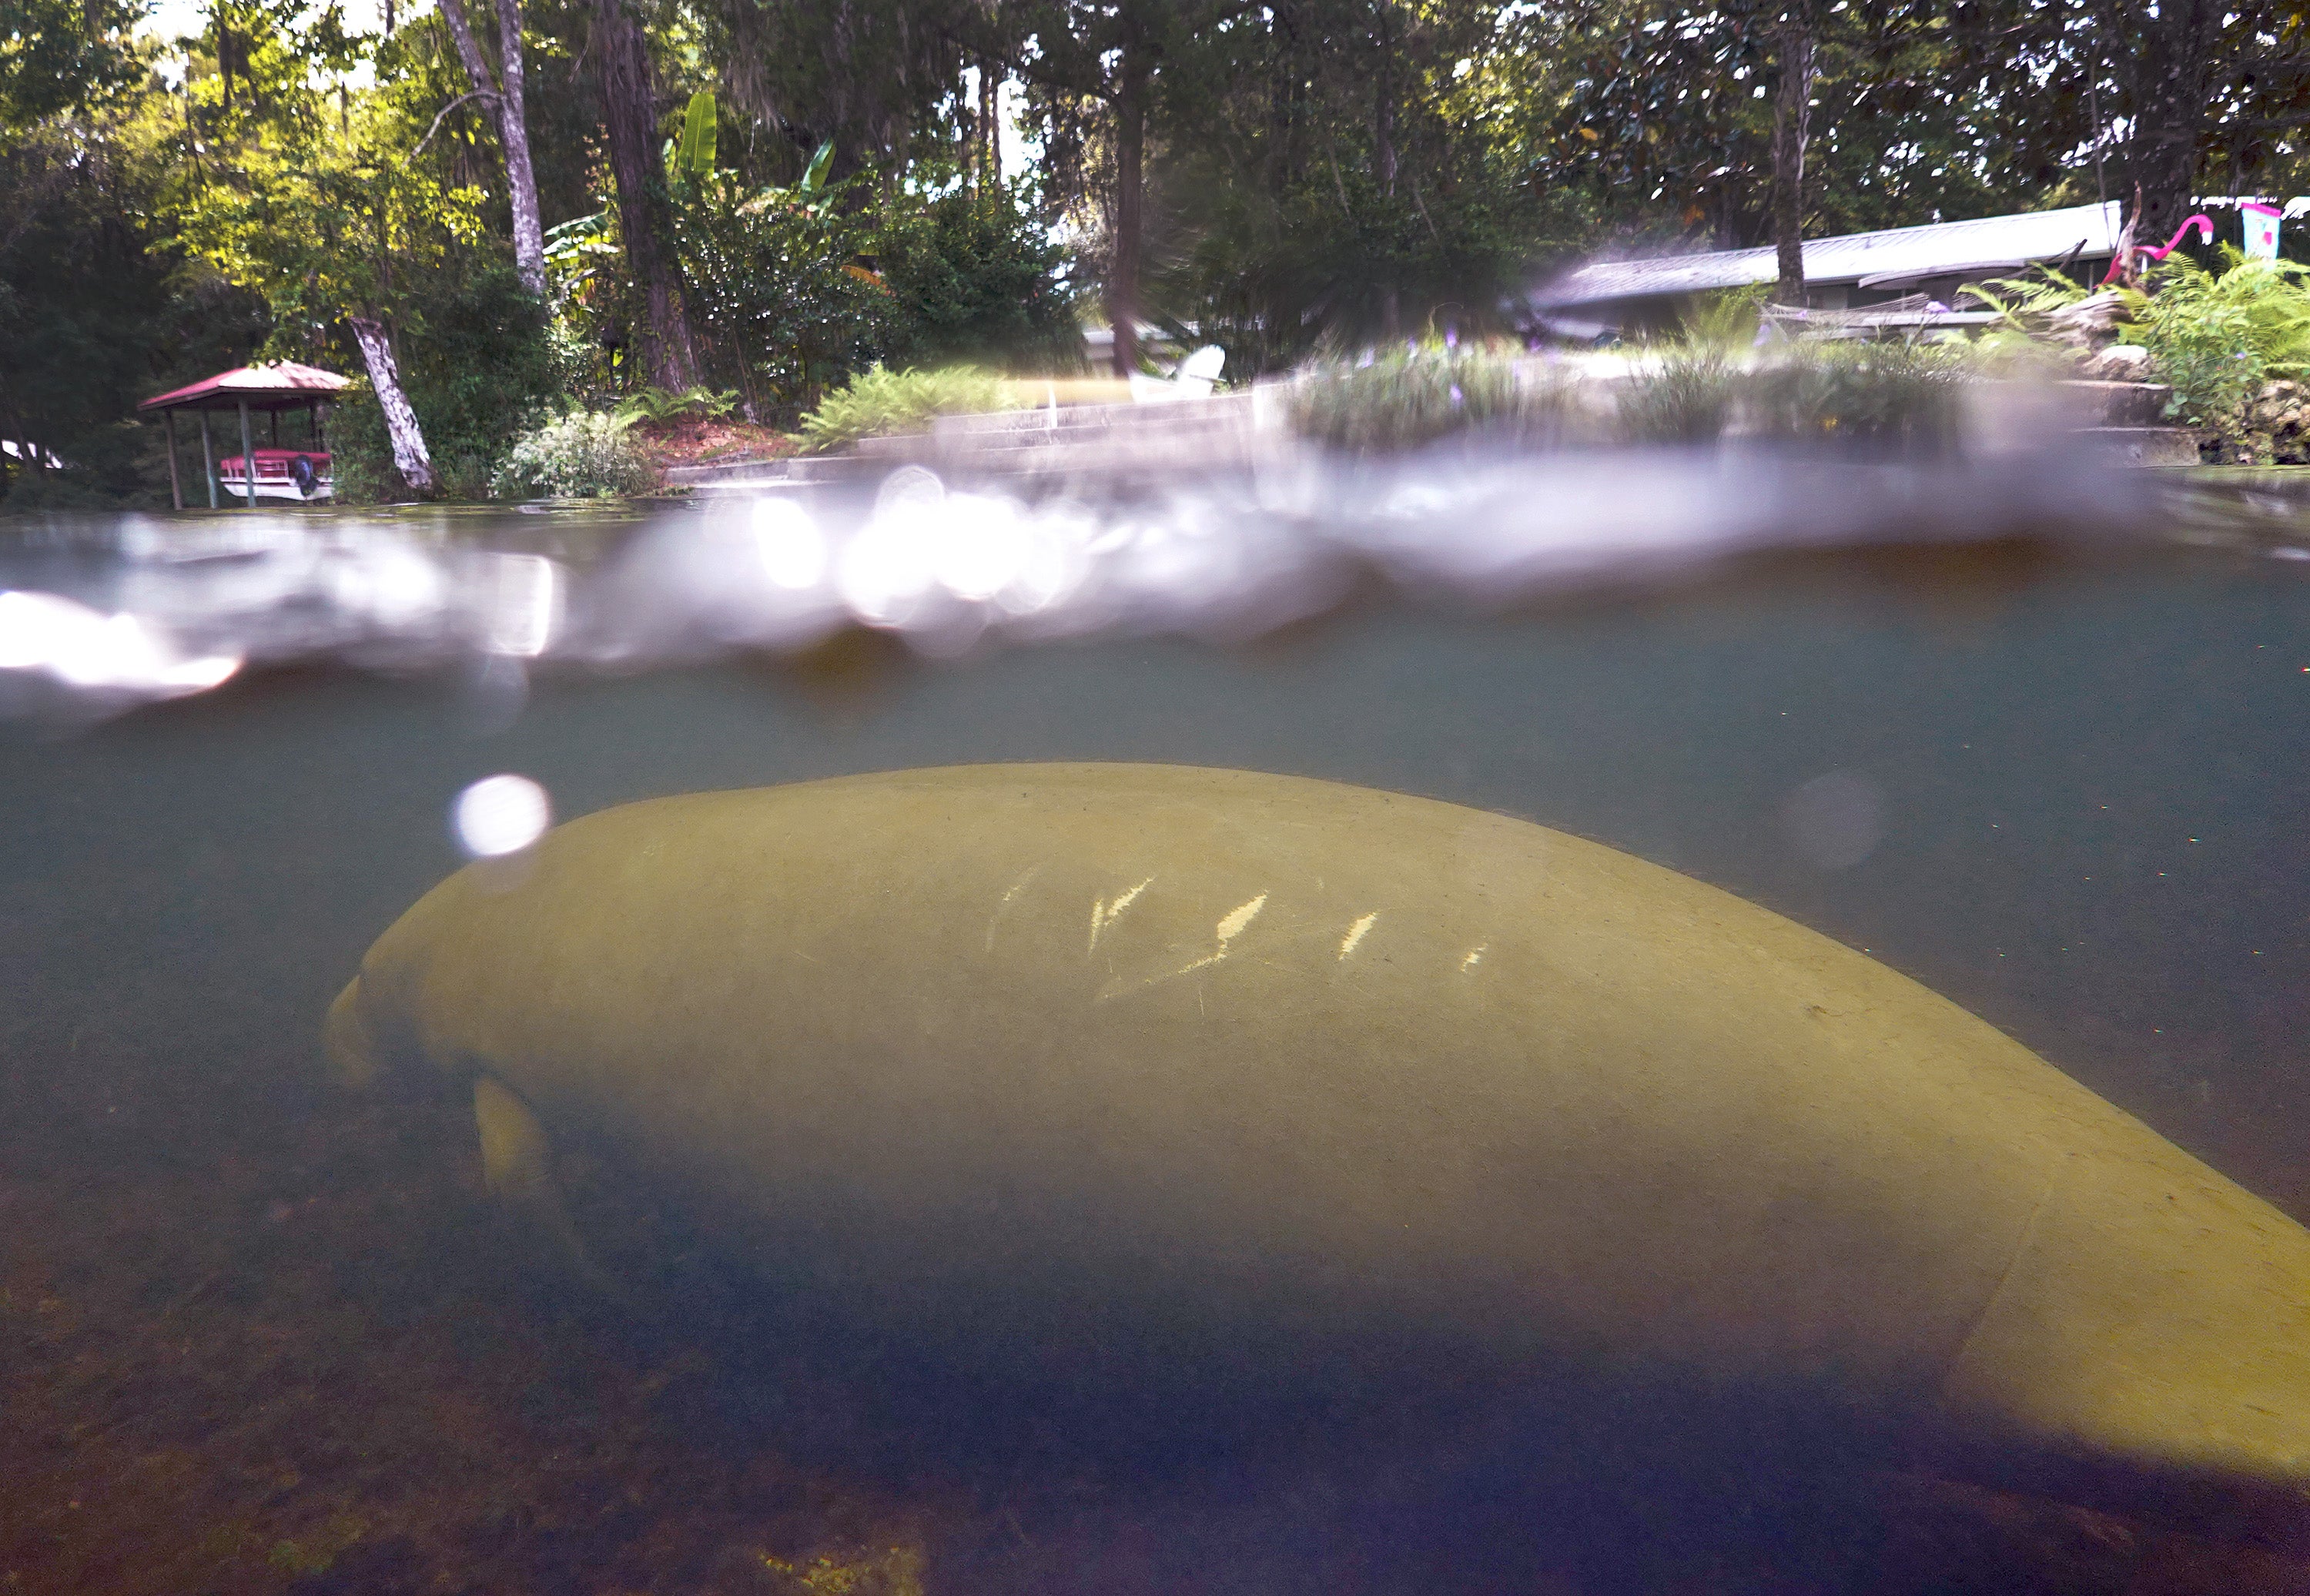 A manatee in Homosassa, Florida. (Photo: Joe Raedle, Getty Images)